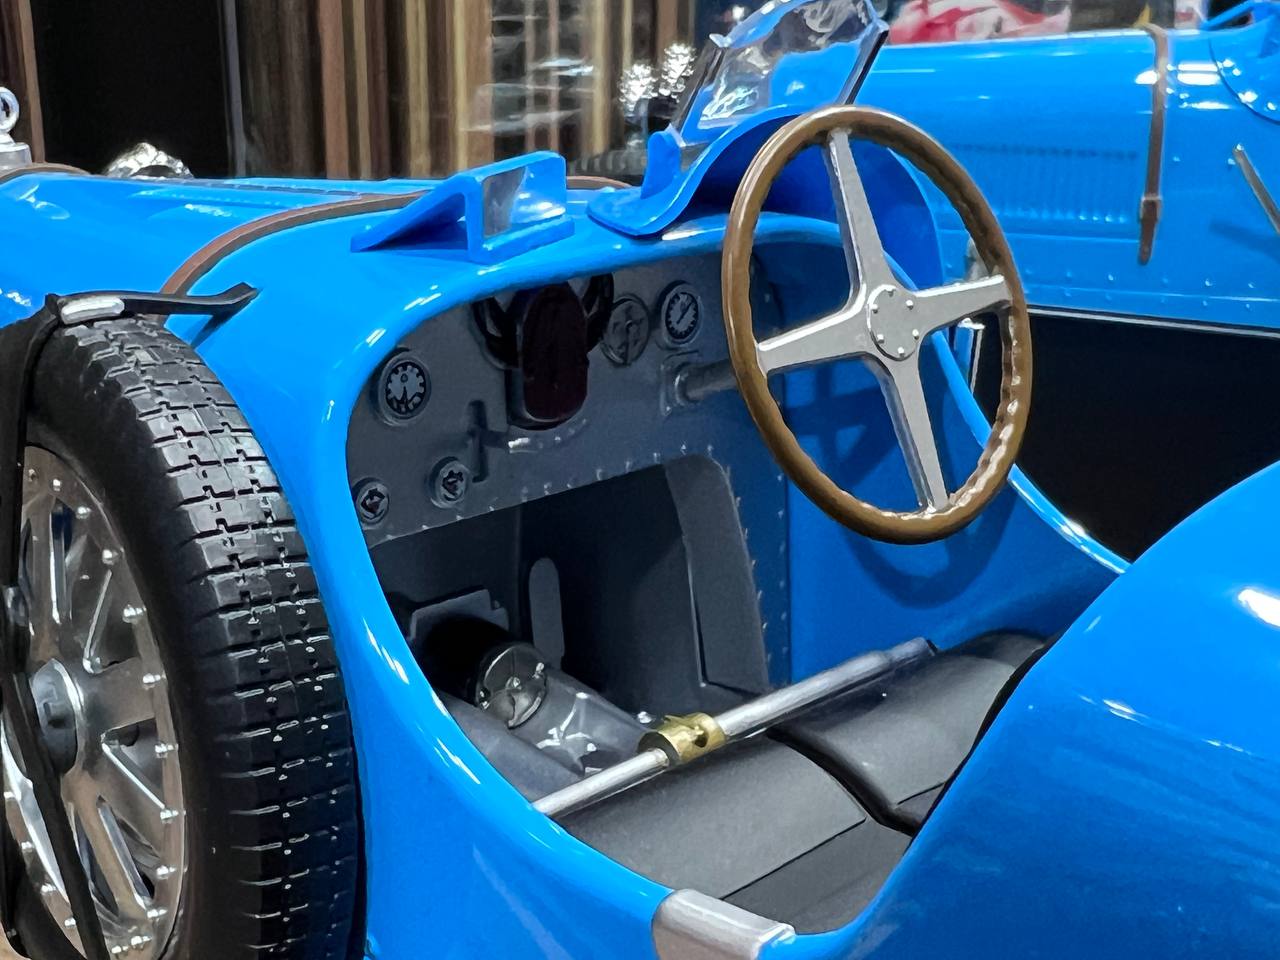 1/18 Diecast Bugatti T35 Blue Norev Scale Model Car